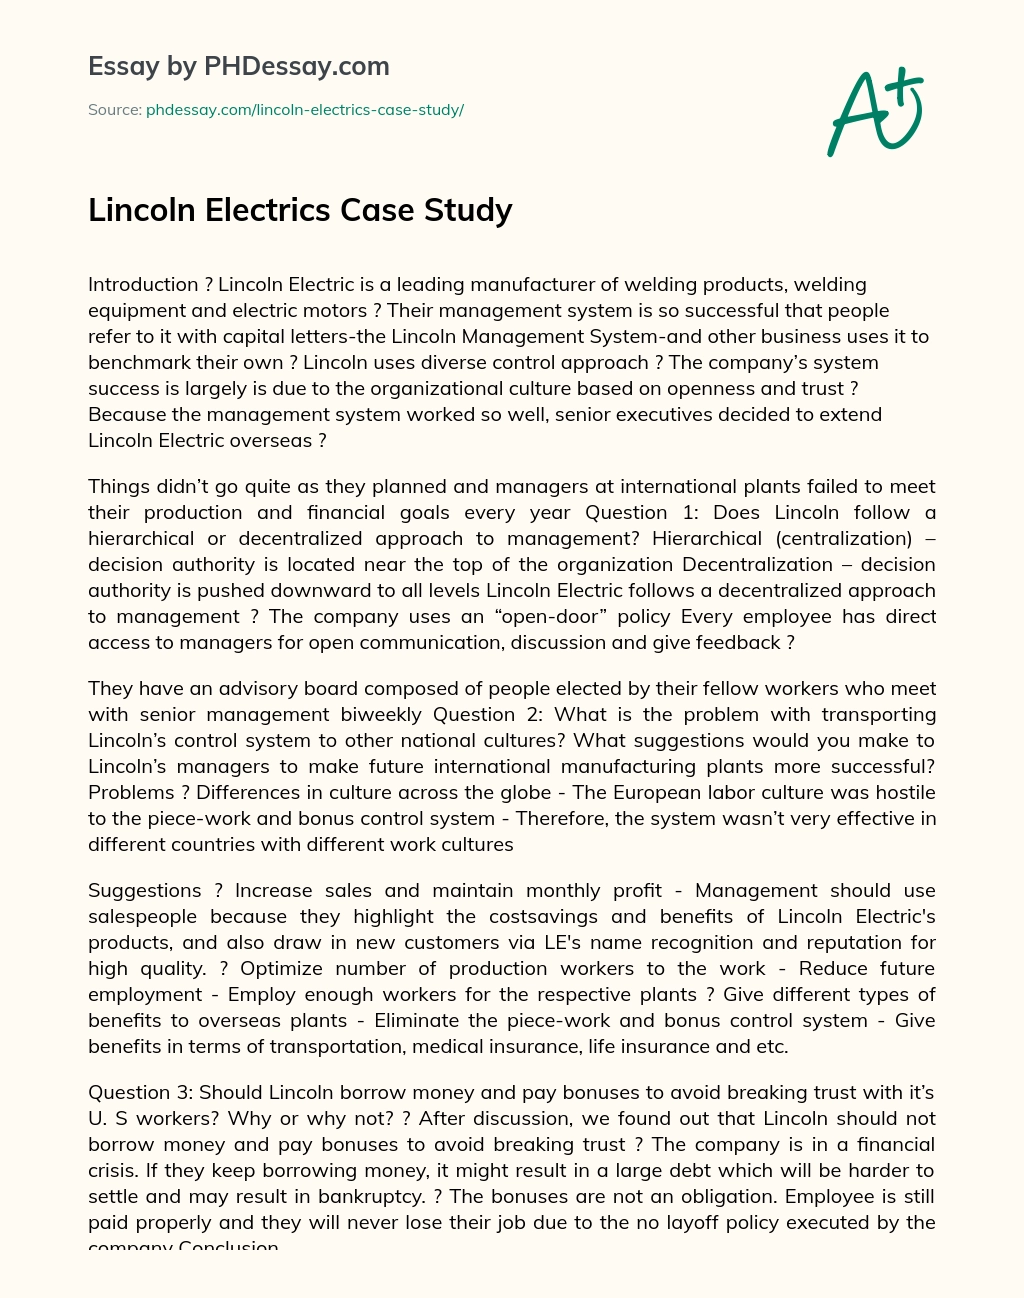 Lincoln Electrics Case Study essay